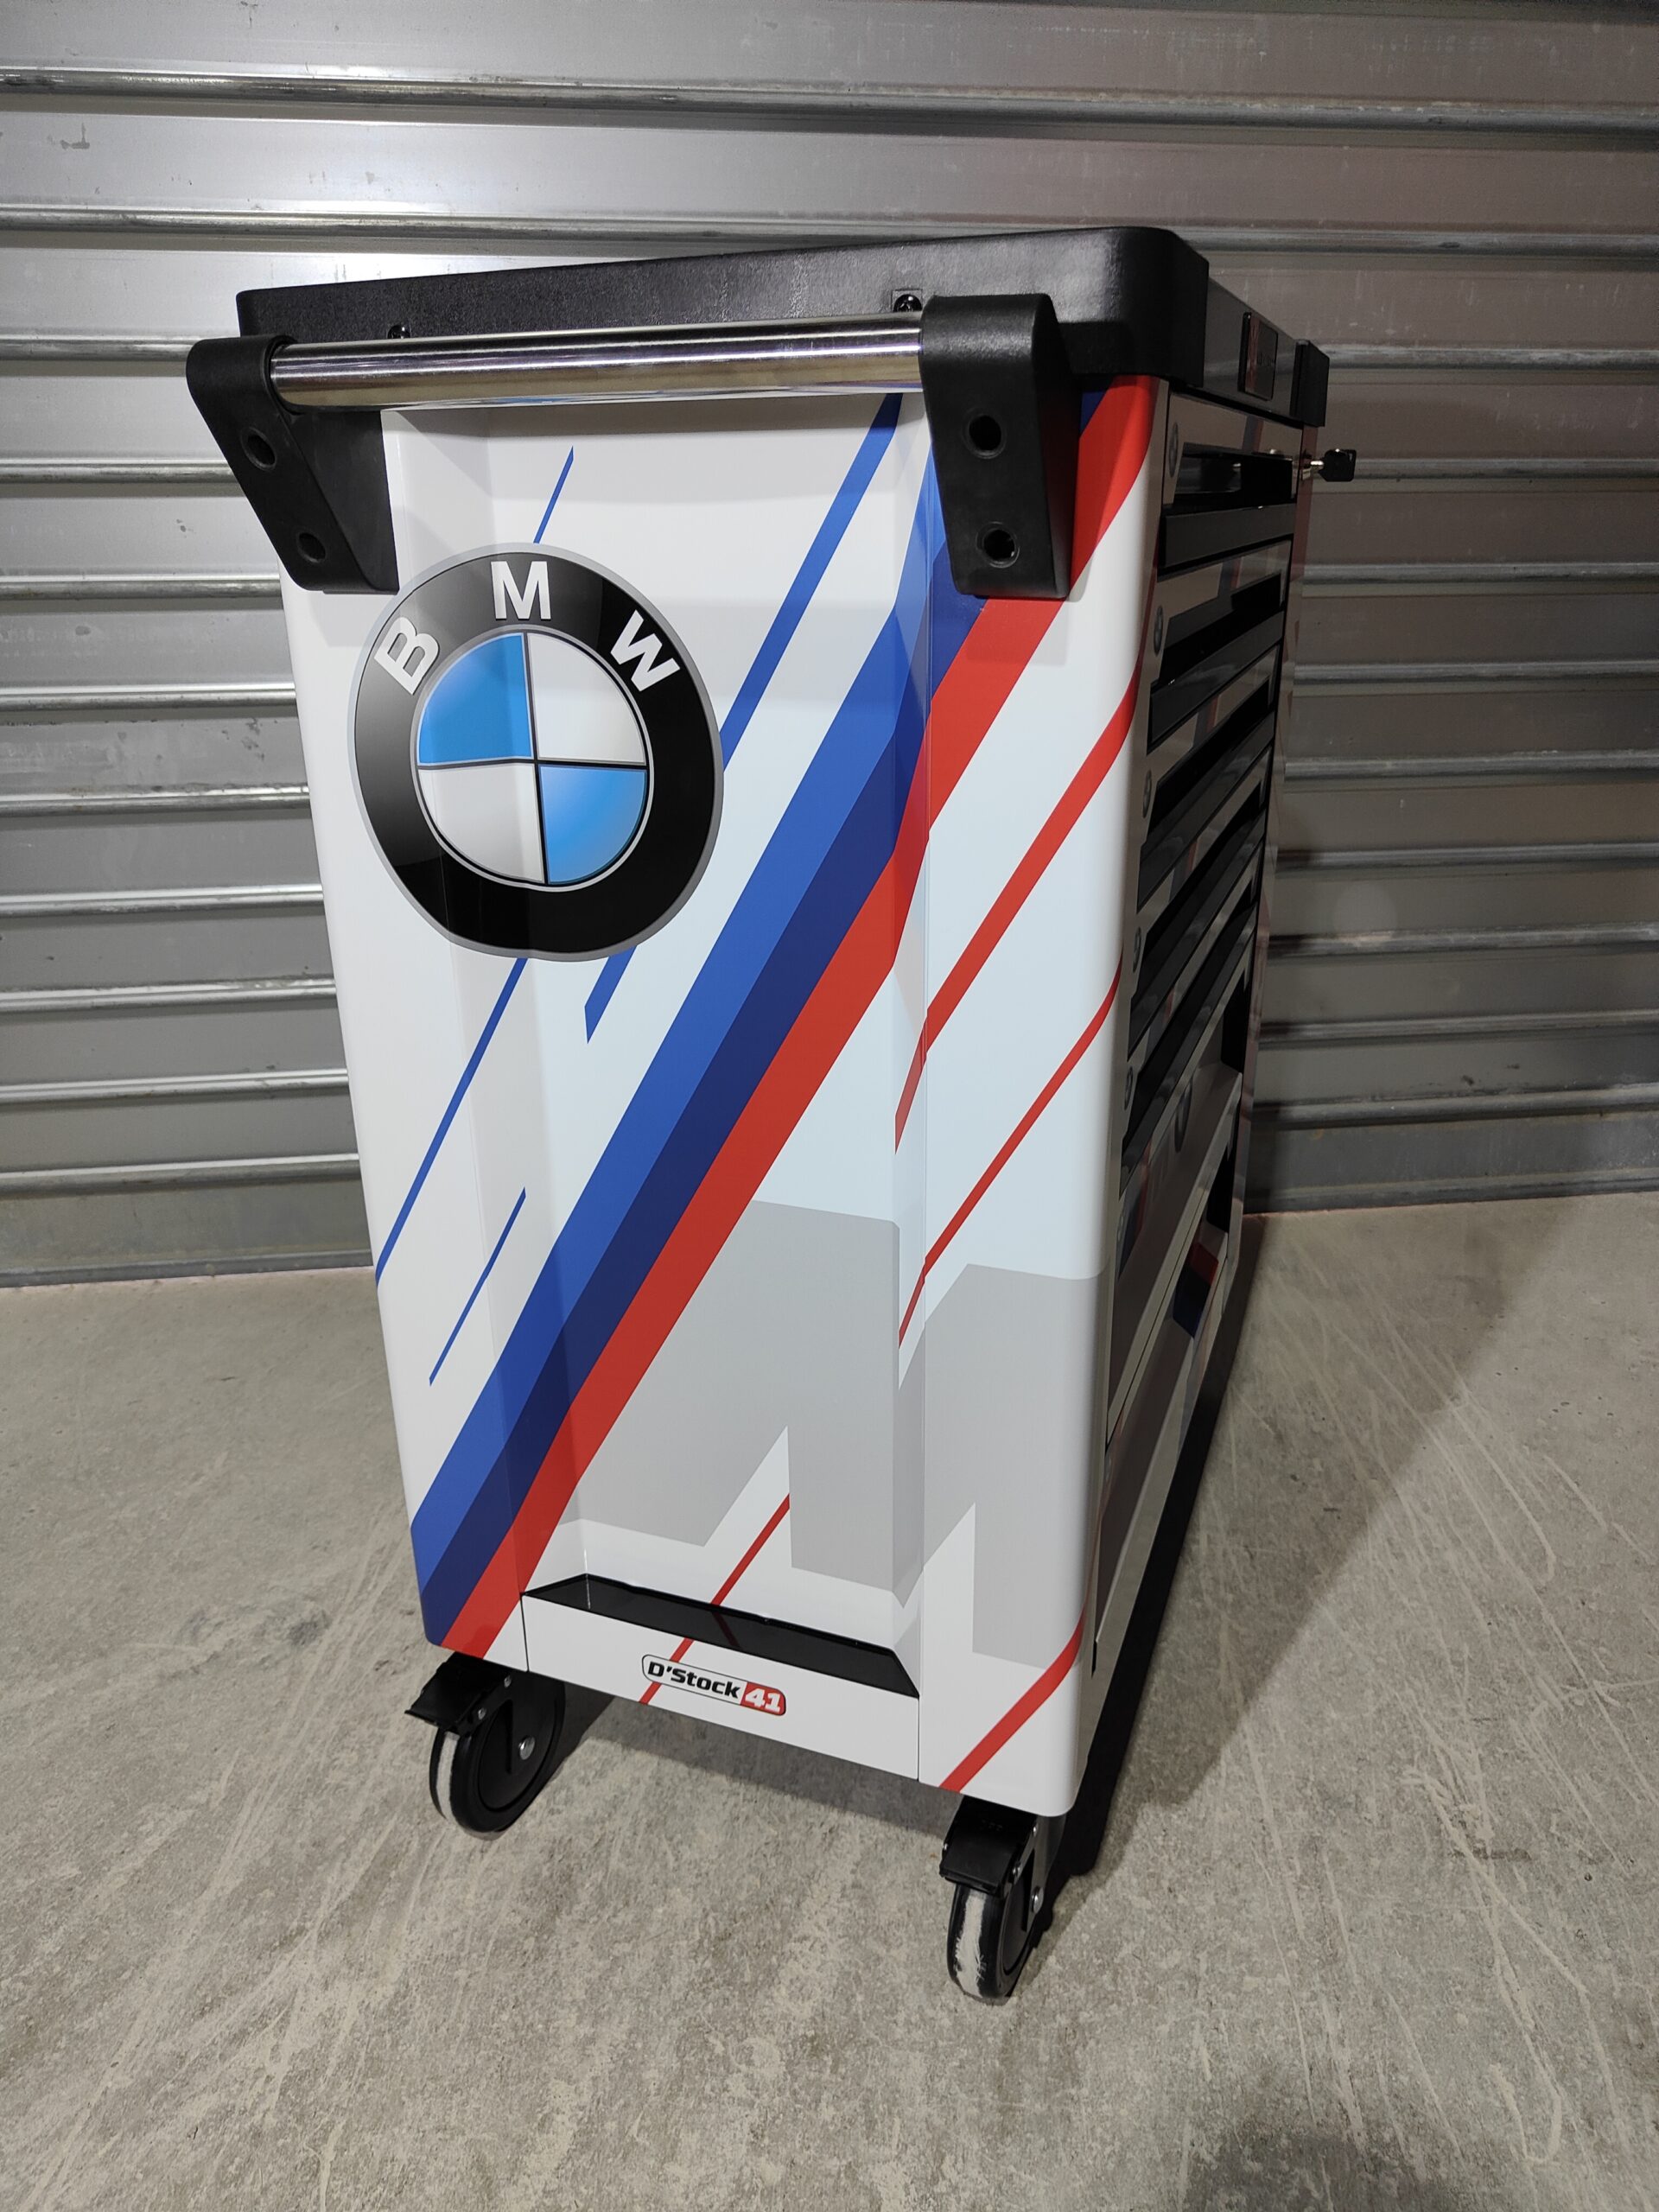 Kit déco BMW pour servante Widmann 7 ou 8 tiroirs + placard